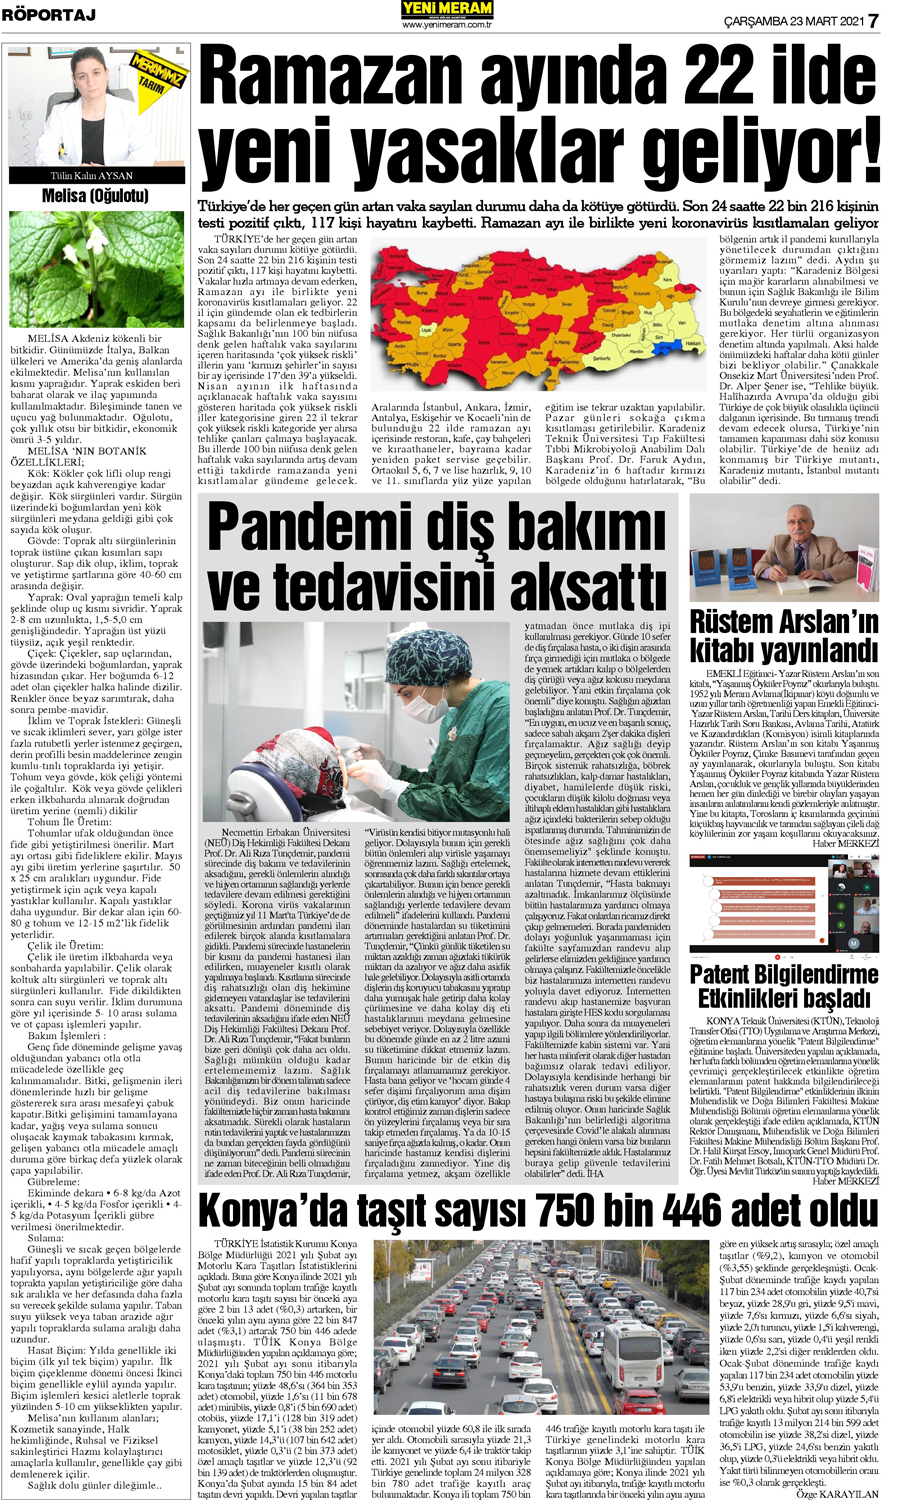 24 Mart 2021 Yeni Meram Gazetesi